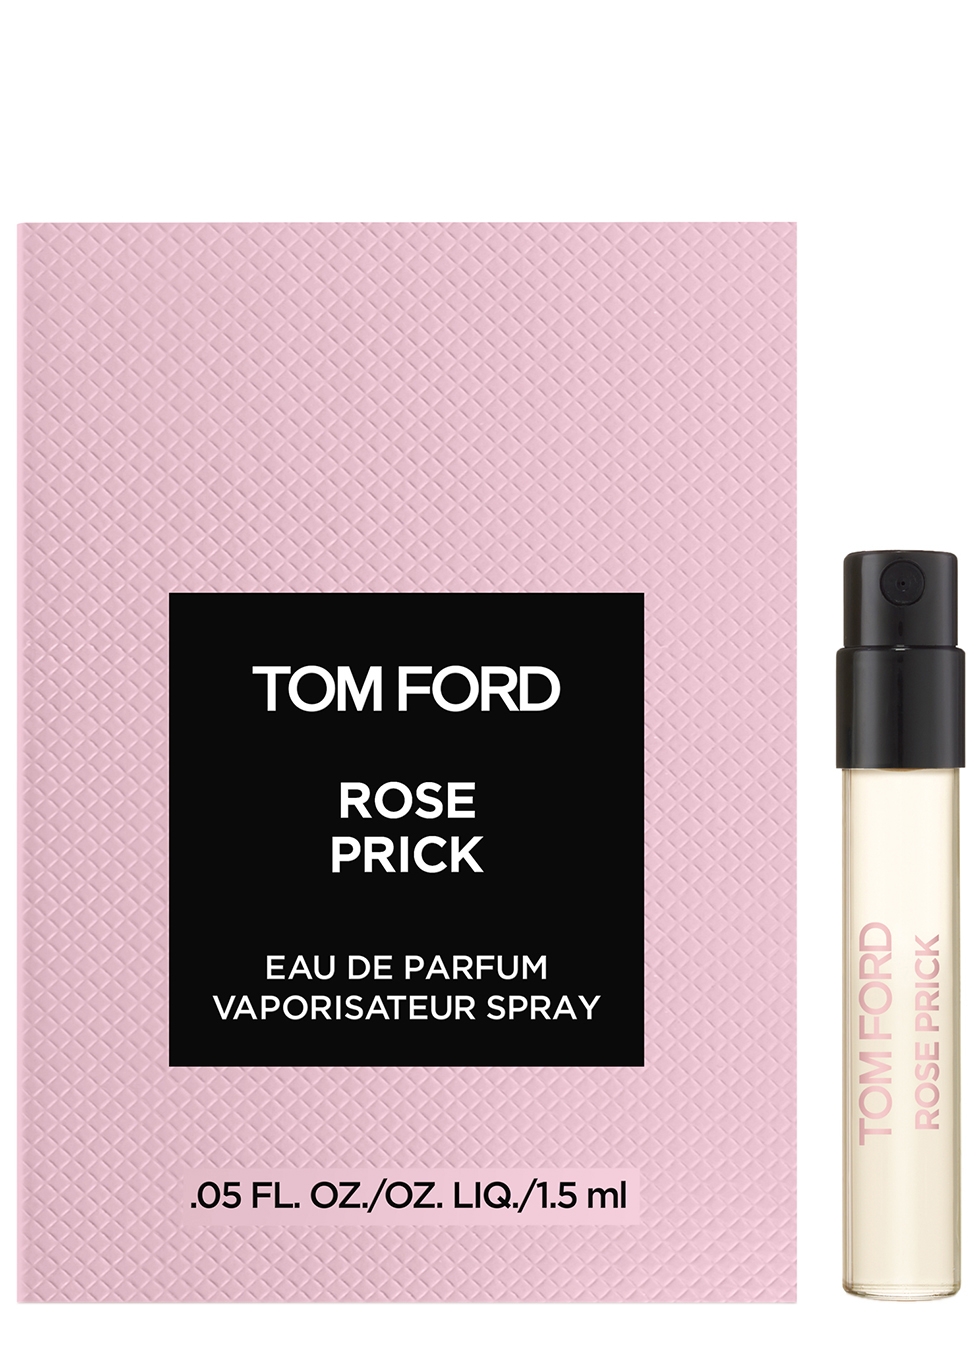 Tom Ford Rose Prick Eau De Parfum 10ml - Harvey Nichols